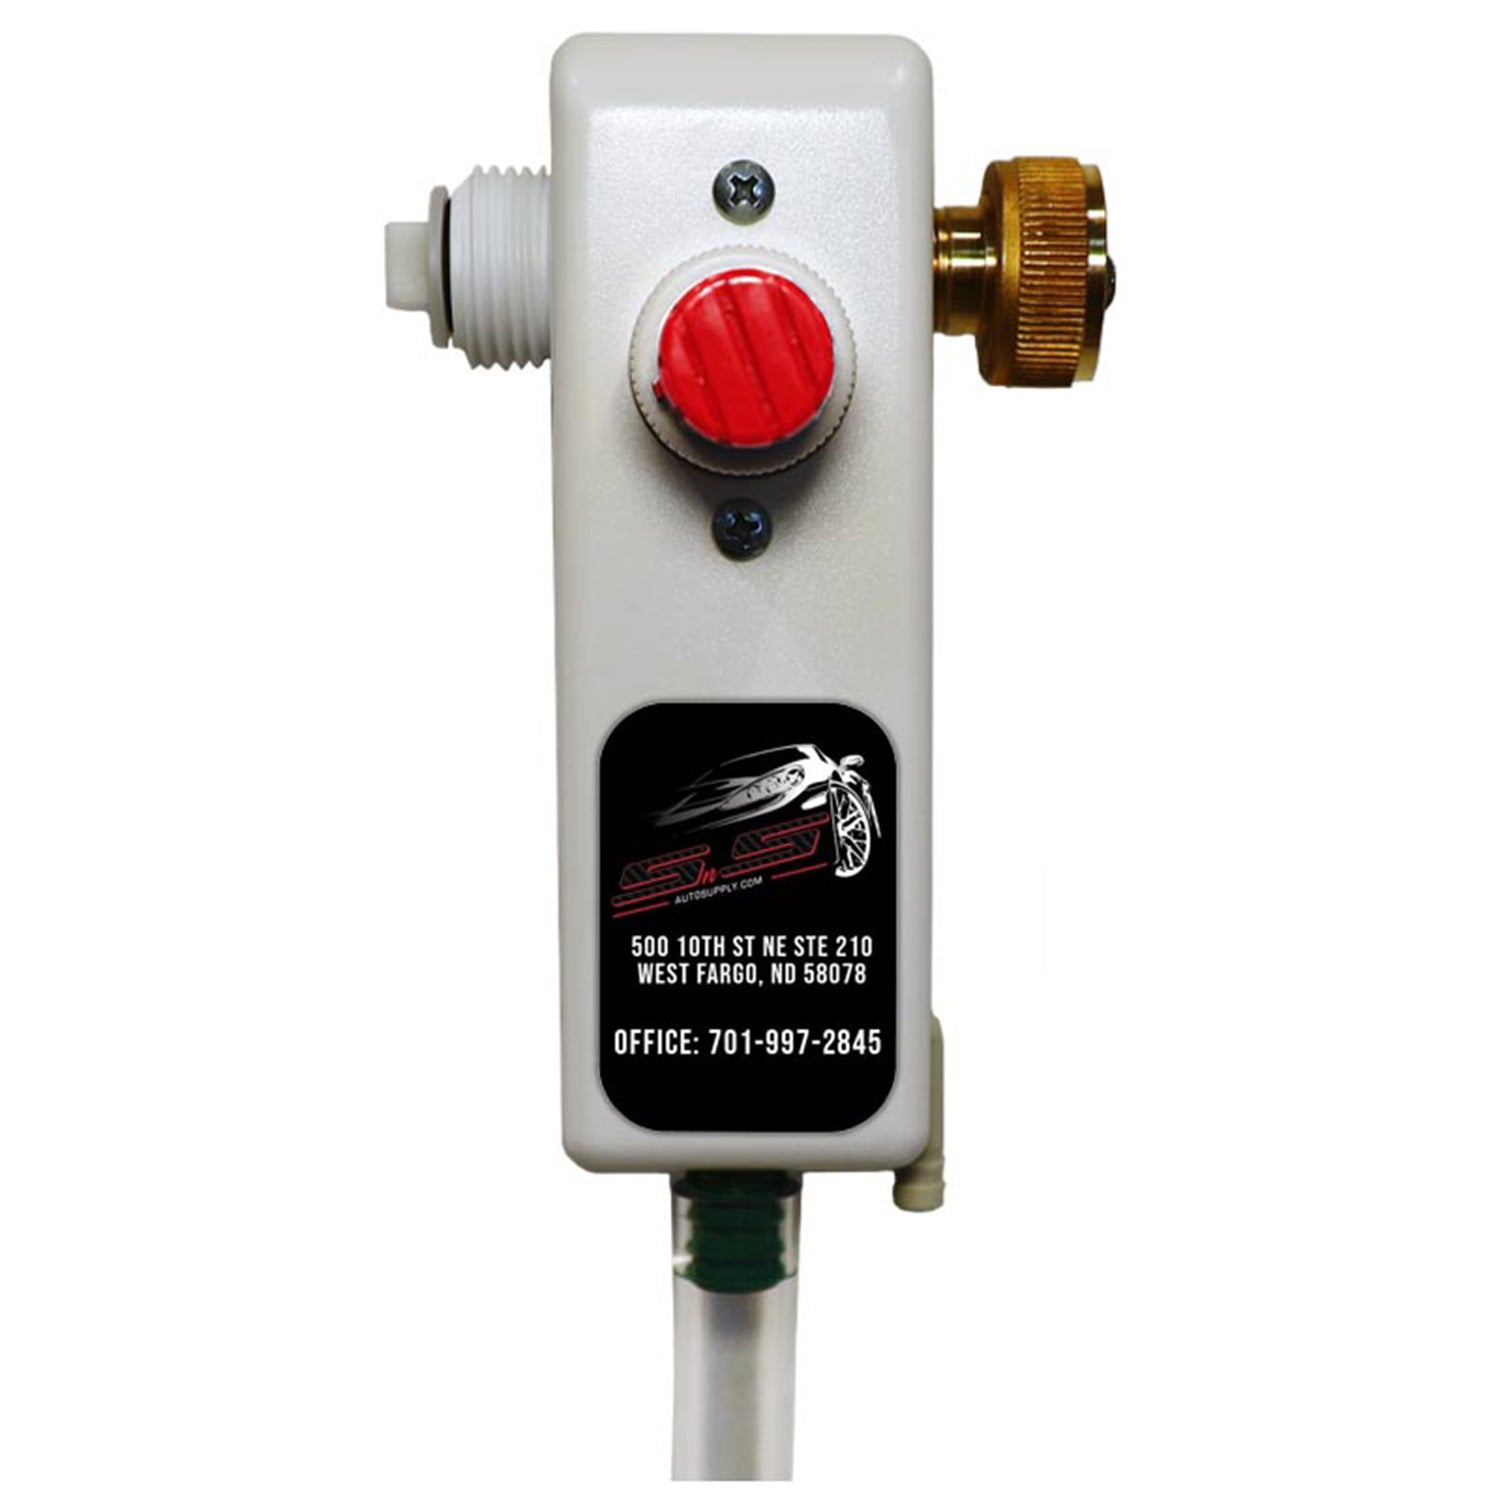 red-dema-dispenser-1-gallon-per-minute-flow-rate